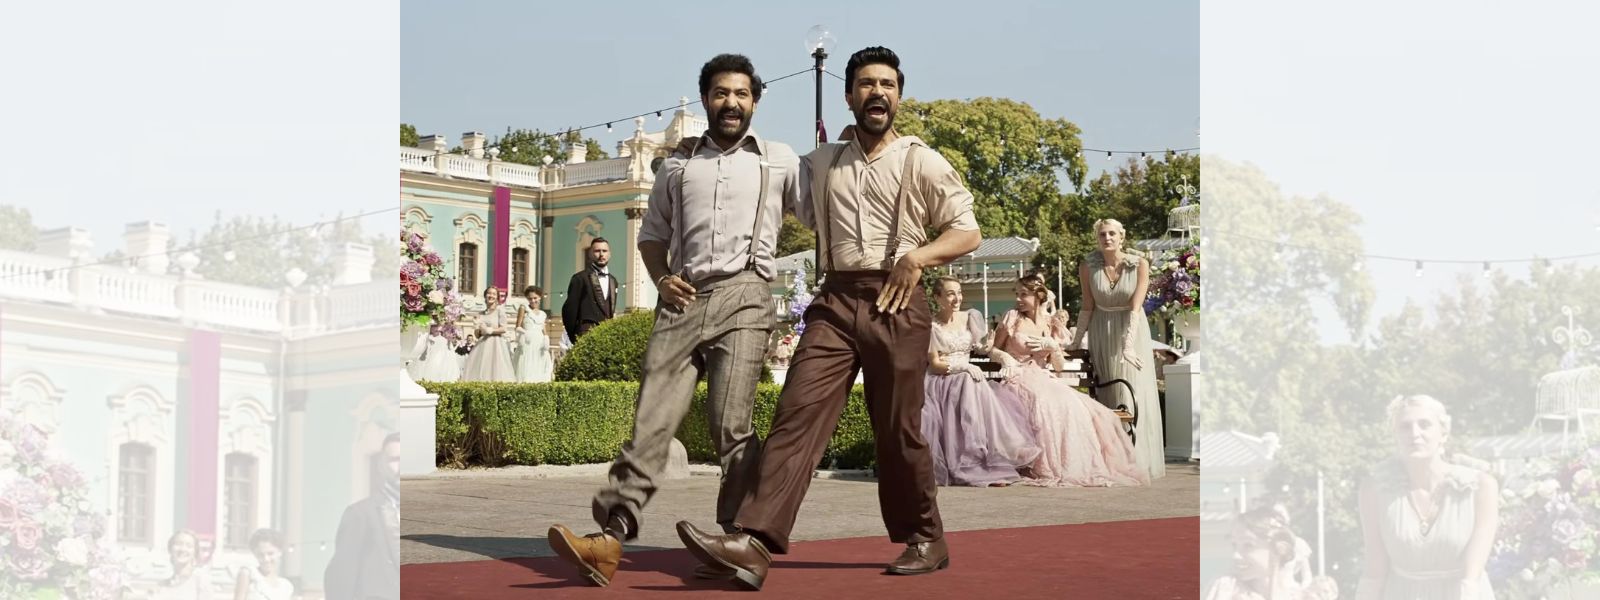 Telugu song 'Naatu Naatu' poised to storm Oscars